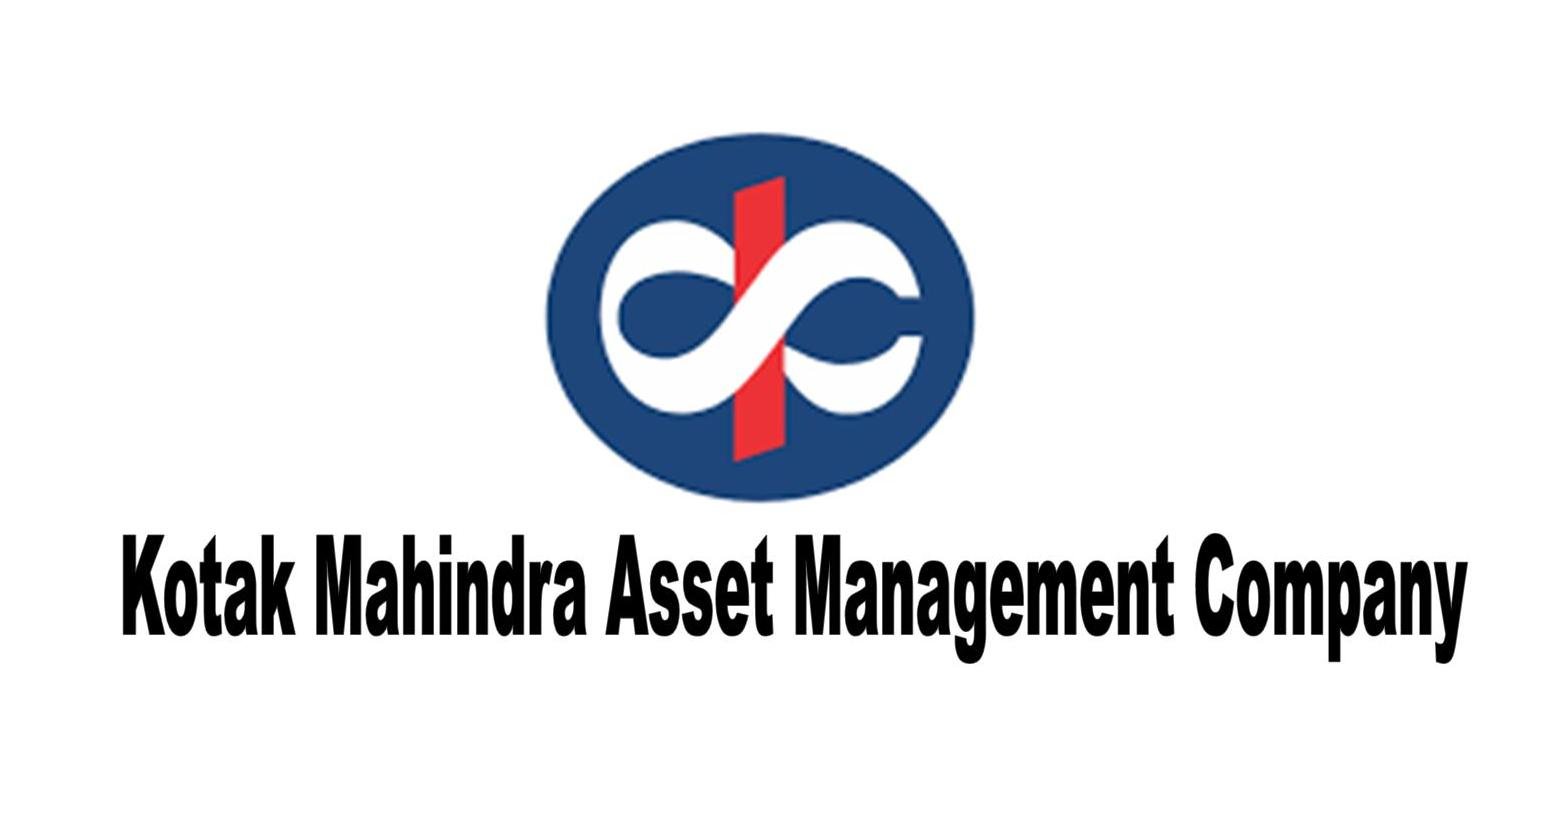 Kotak Mahindra Asset Management Company